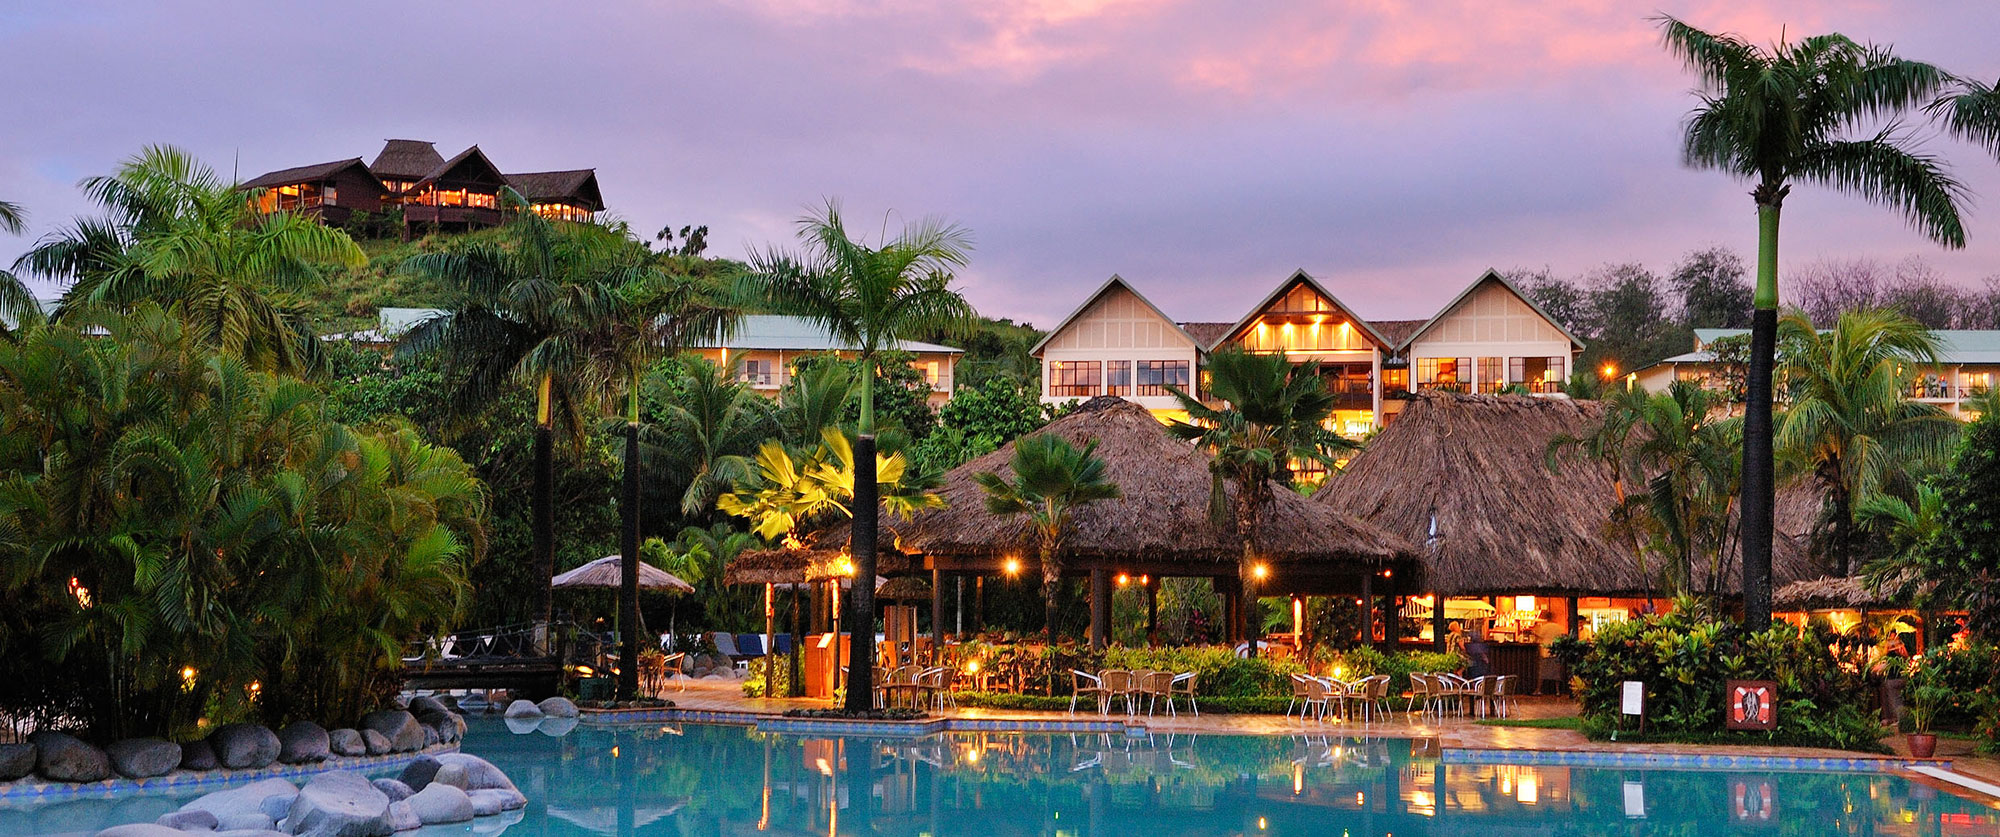 Fiji Islands Honeymoon: Plunge Pools, Beaches, Adventure